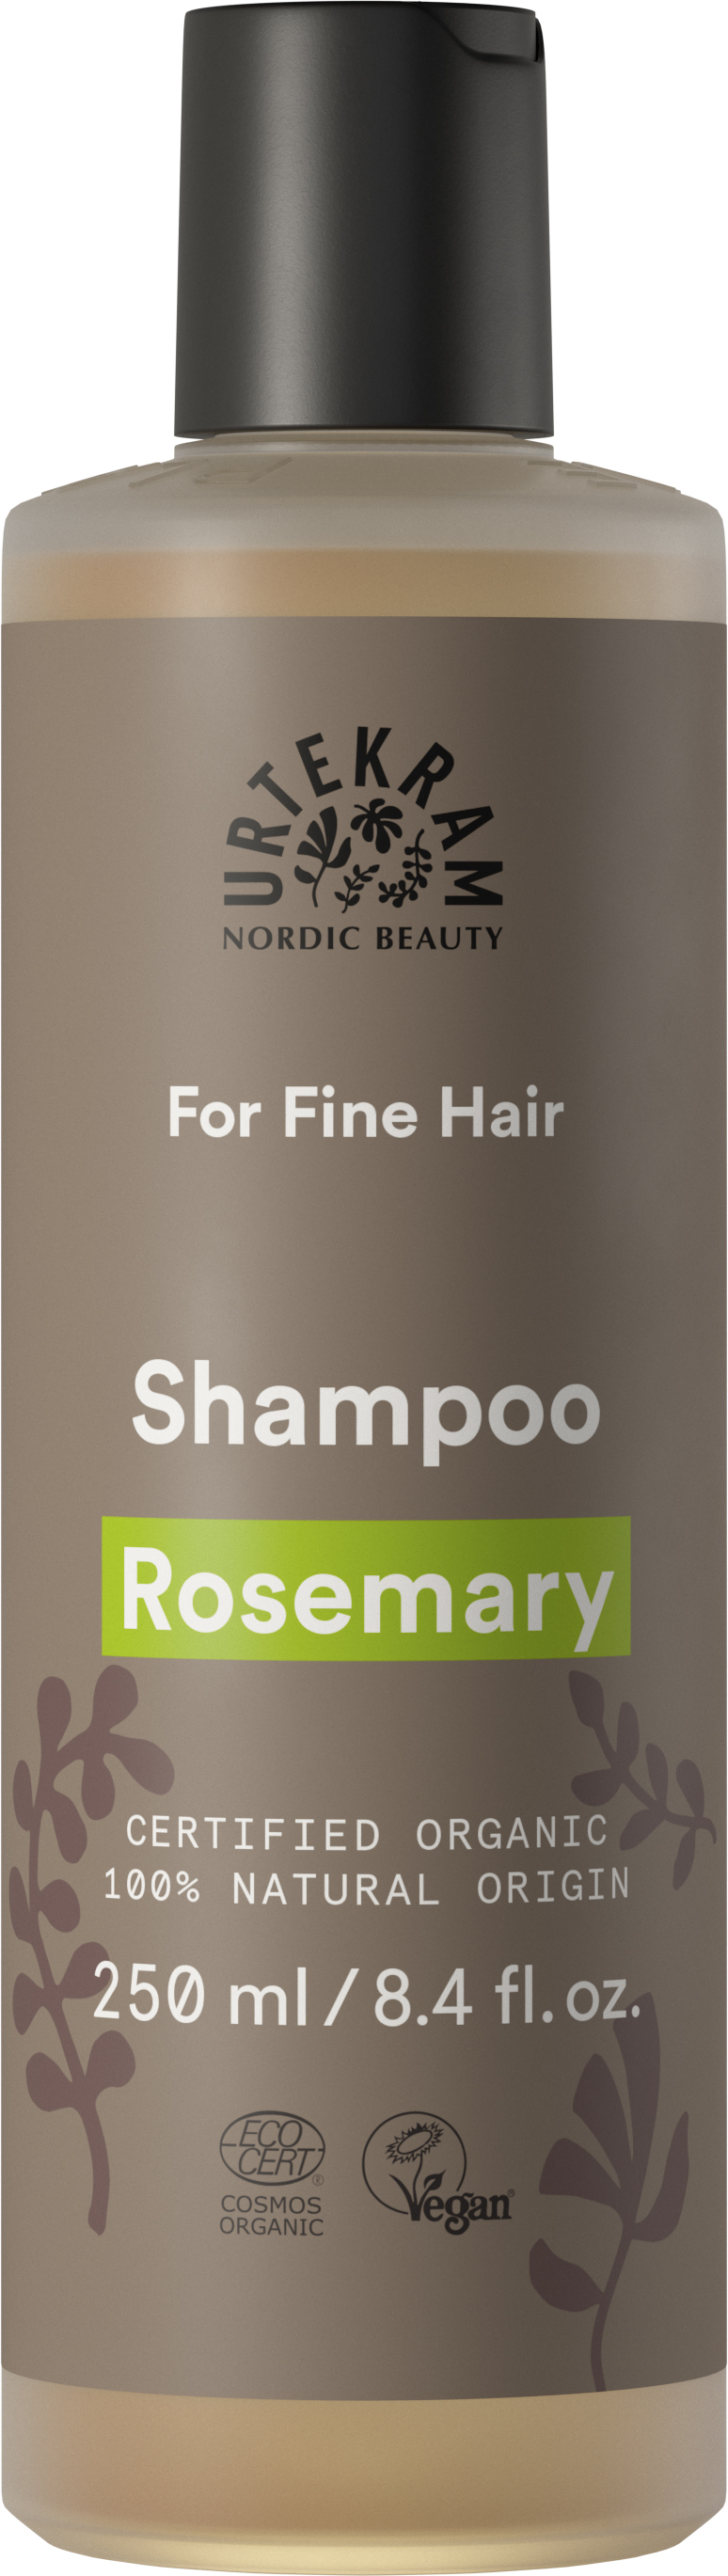 Urtekram Rosemary Shampoo | Rosmarin Shampoo für feines Haar